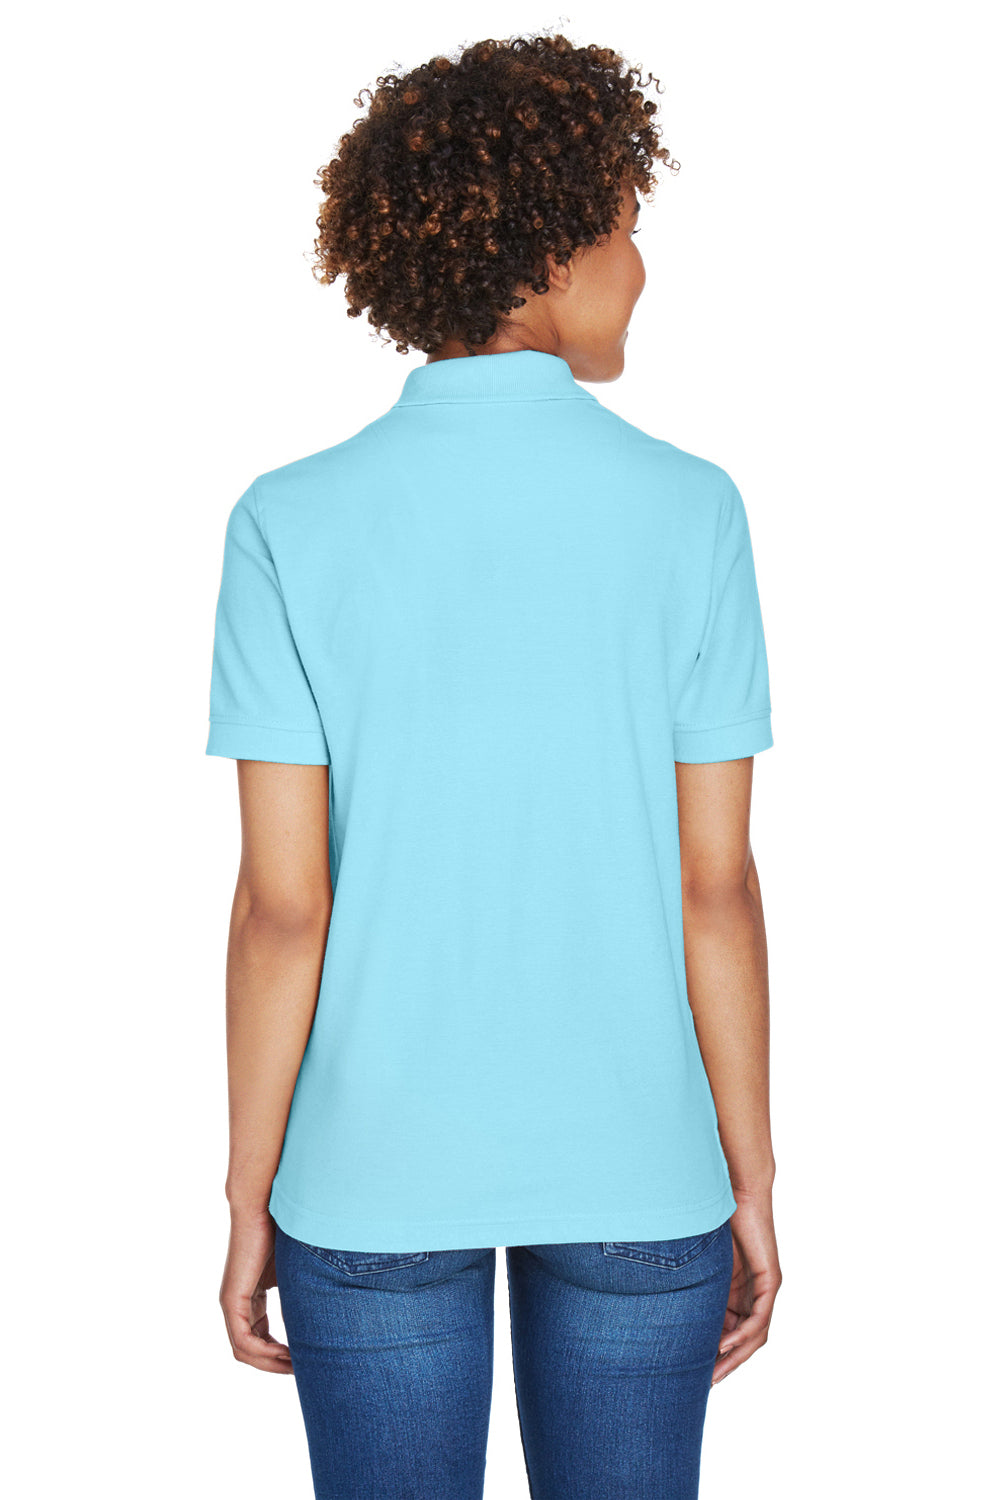 UltraClub 8541 Womens Whisper Short Sleeve Polo Shirt Baby Blue Back